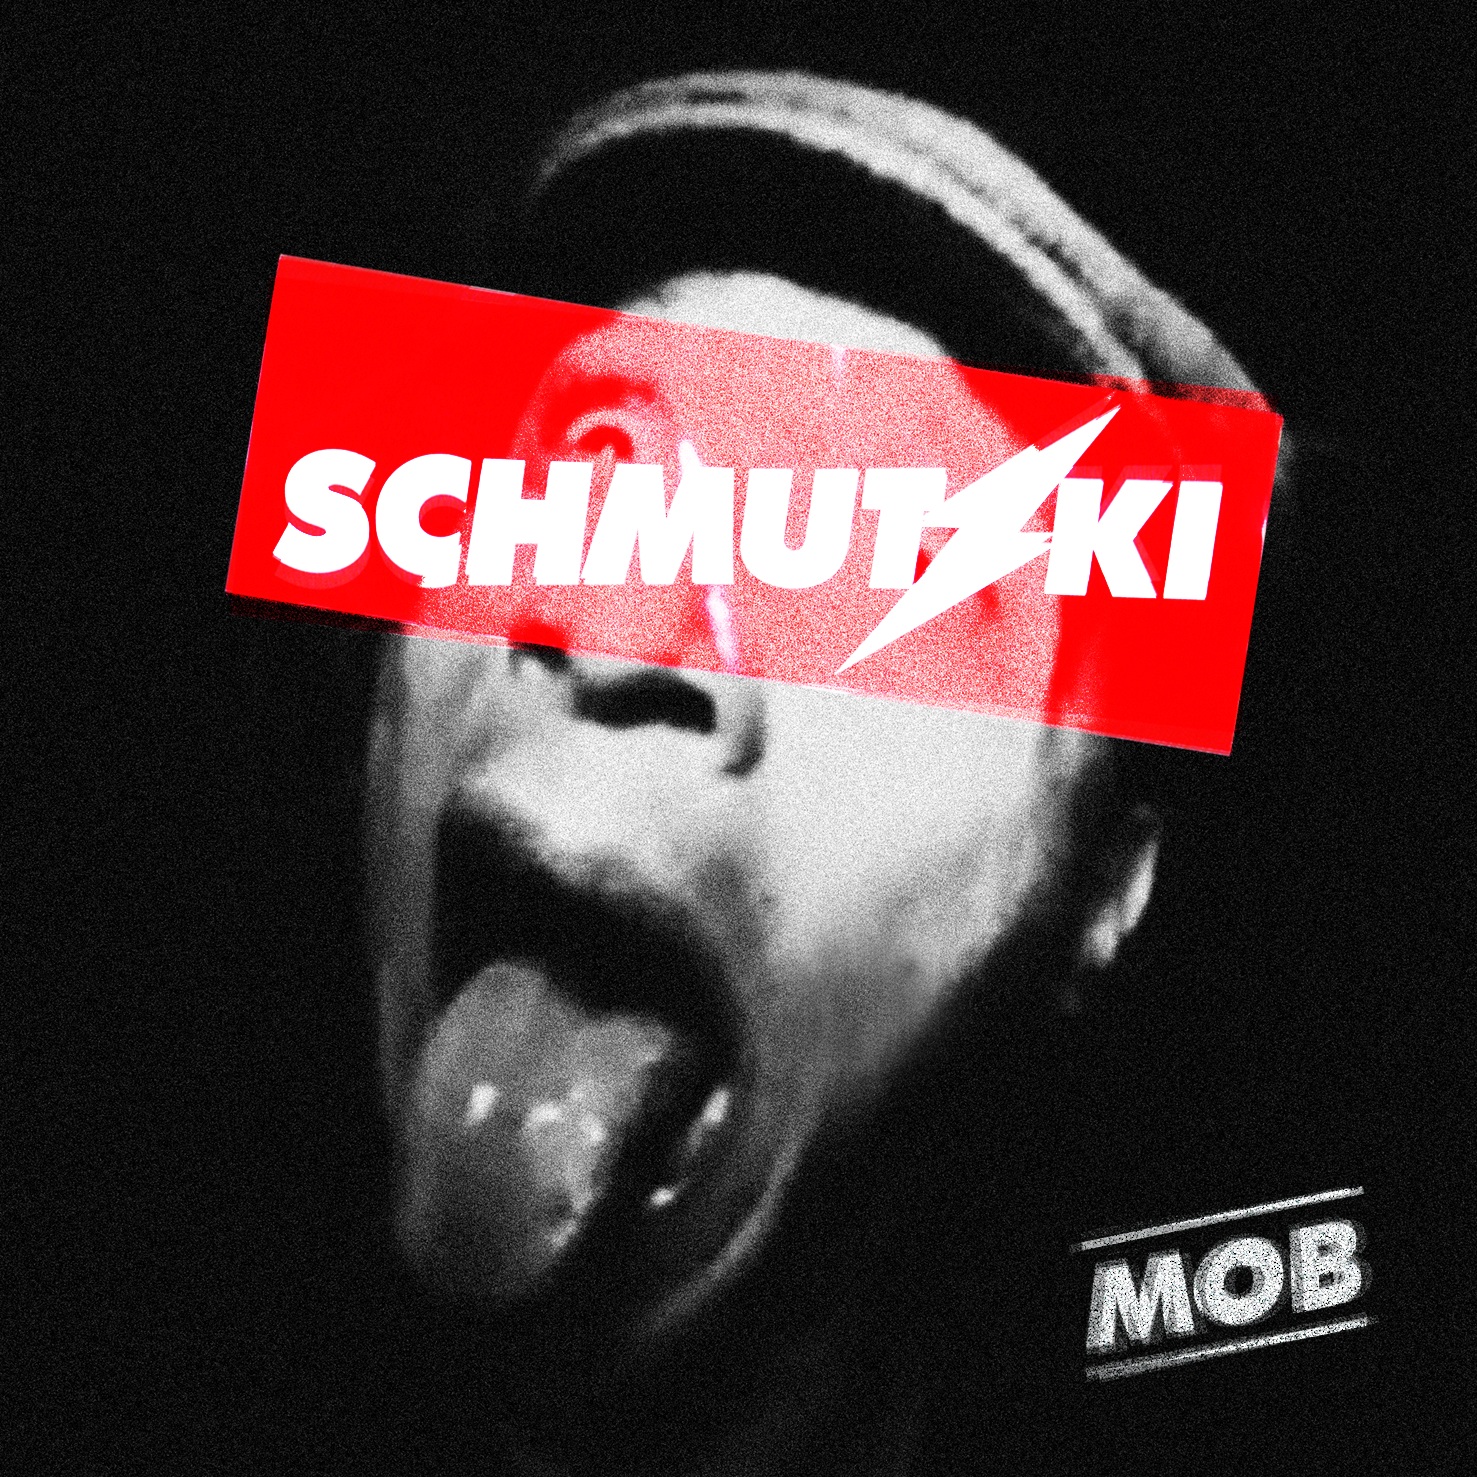 Schmutzki MOB EP Cover